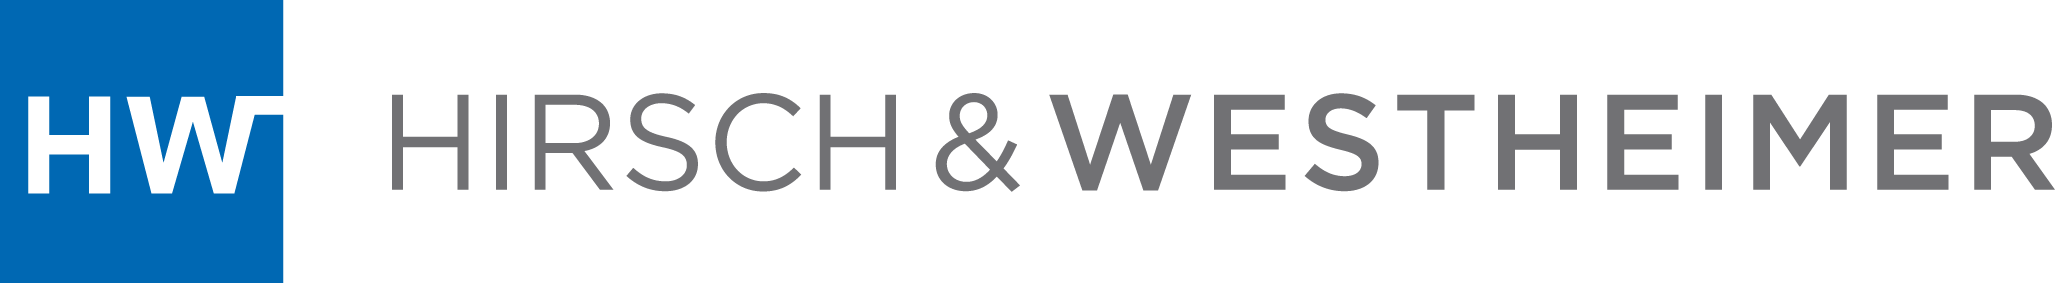 Hirsch & Westheimer, P.C. – Attorneys and Counselors since 1913.